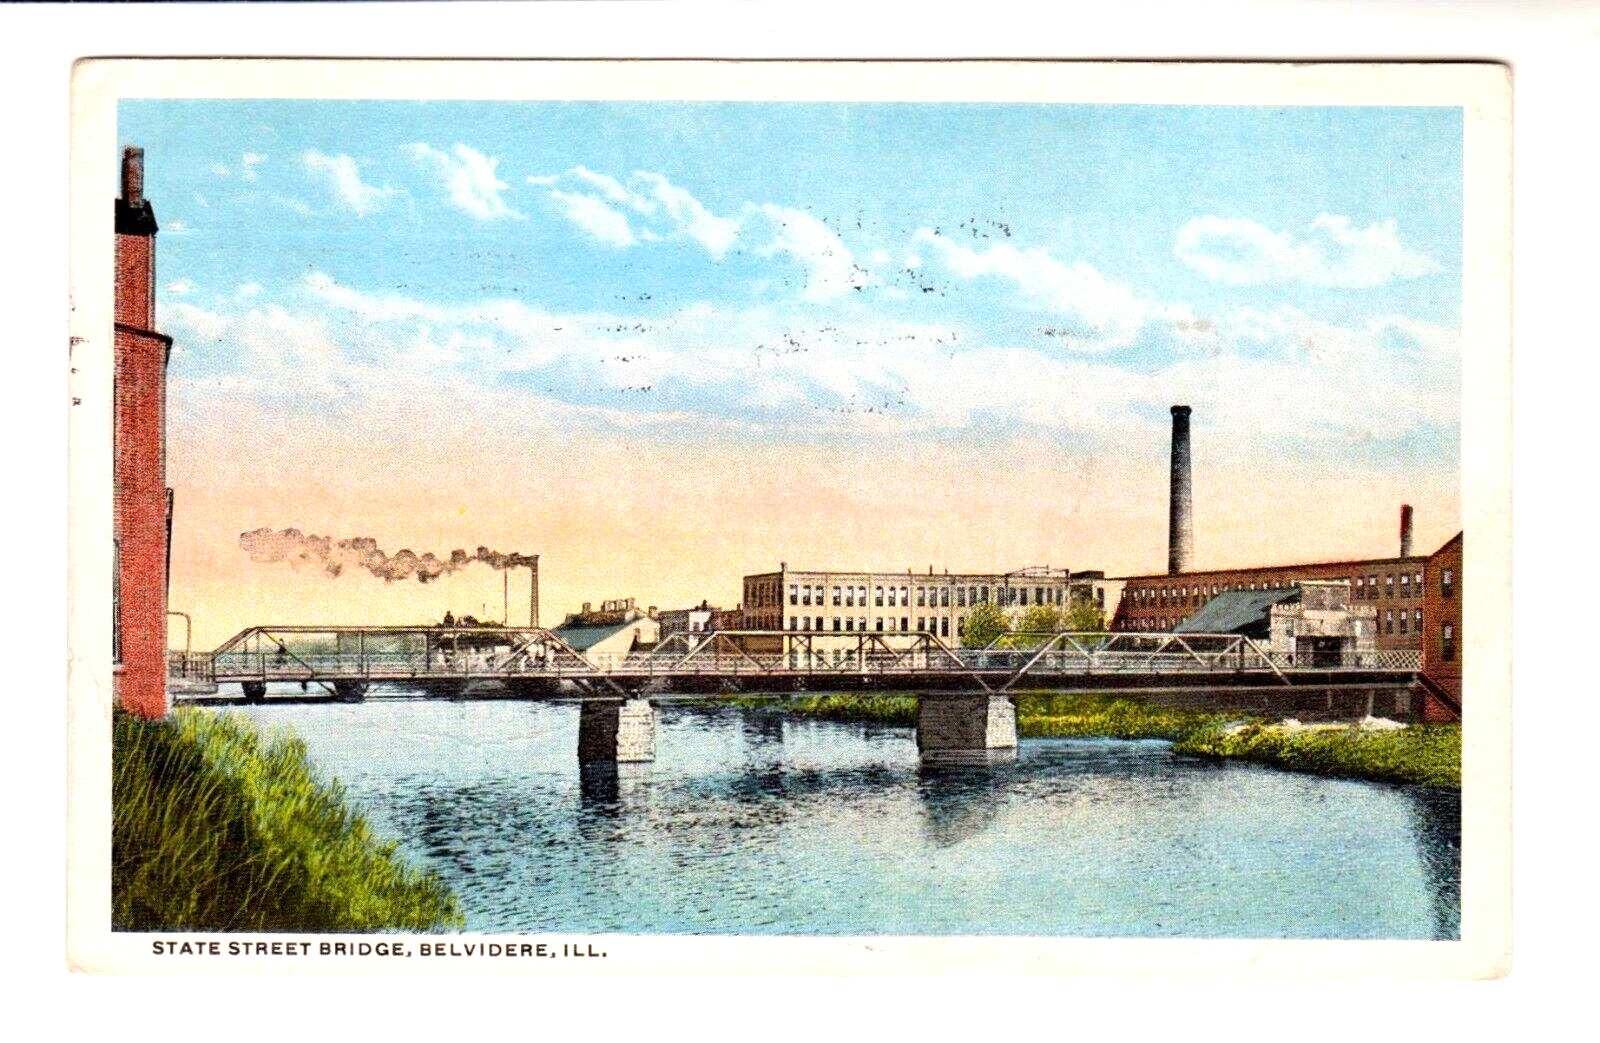 STATE STREET BRIDGE, BELVIDERE, ILLINOIS - 1915 Postcard